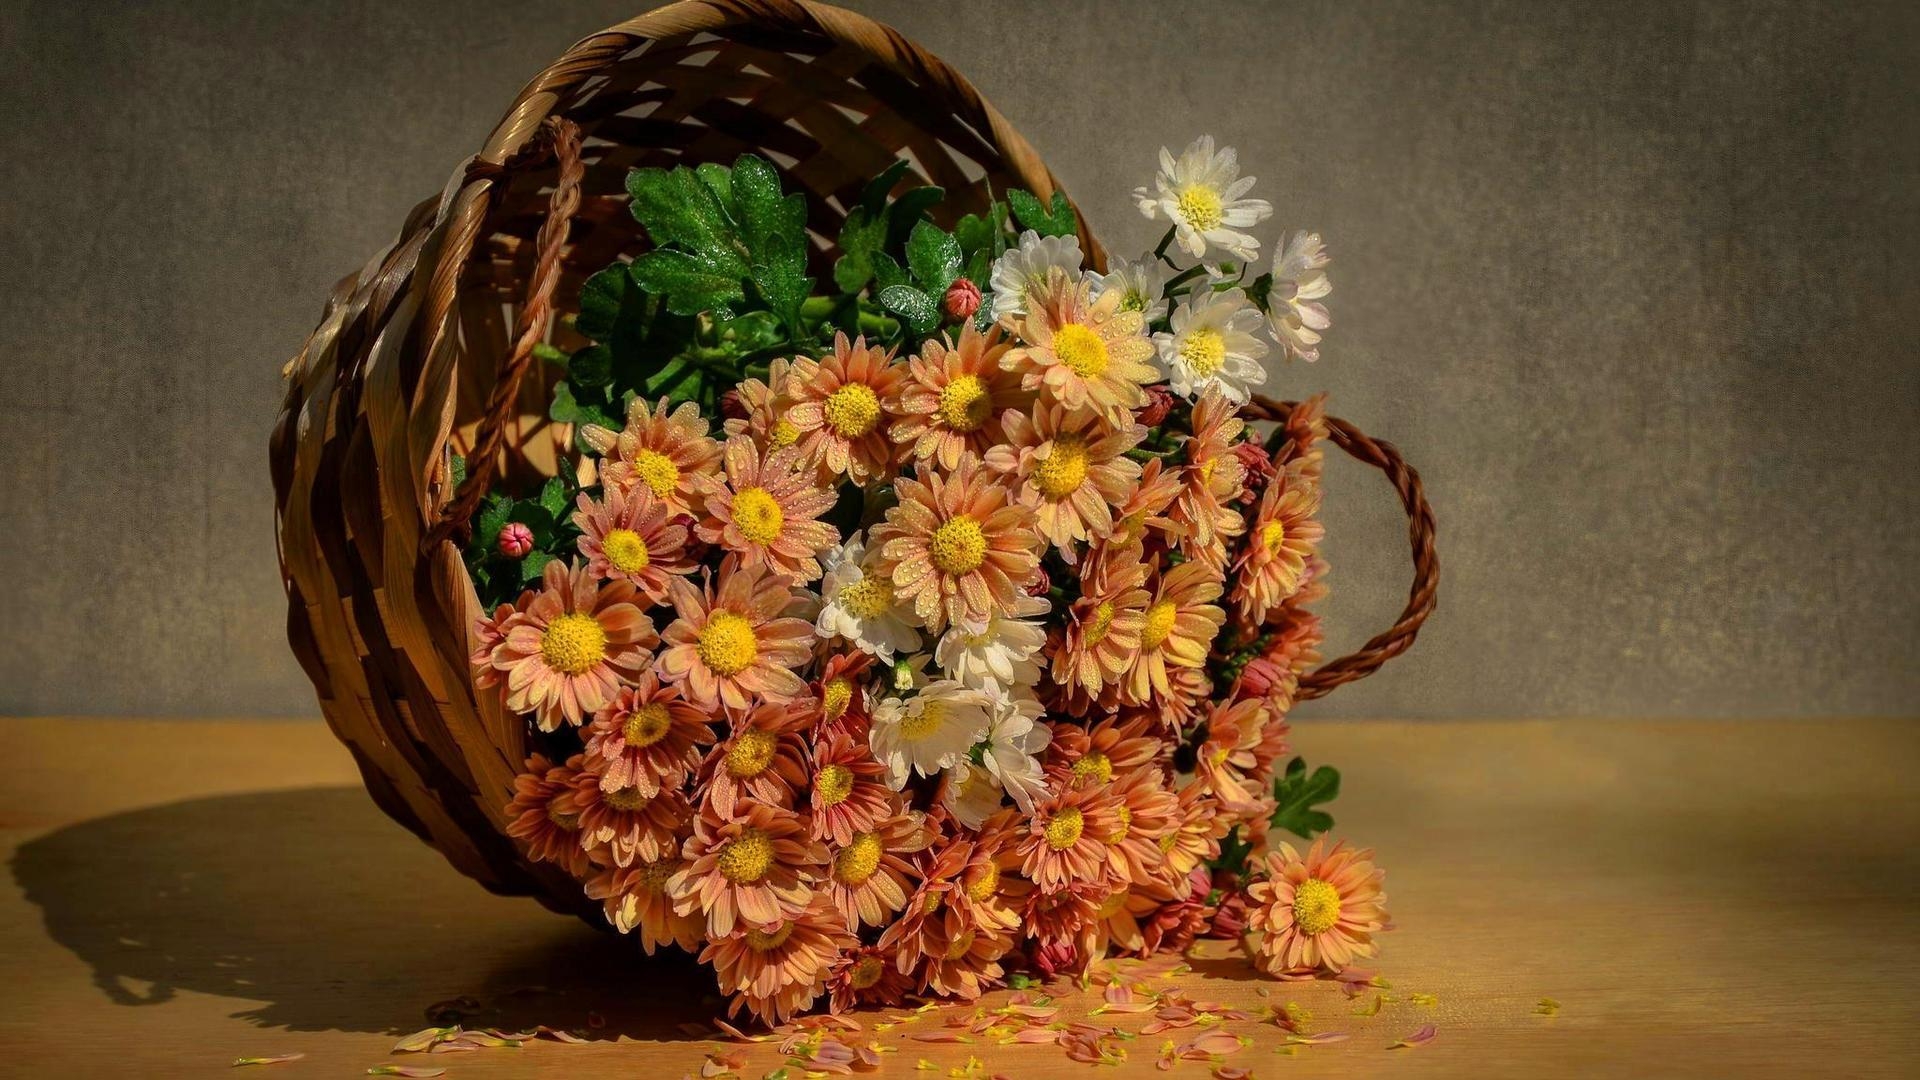 Flowers Basket for 1920 x 1080 HDTV 1080p resolution